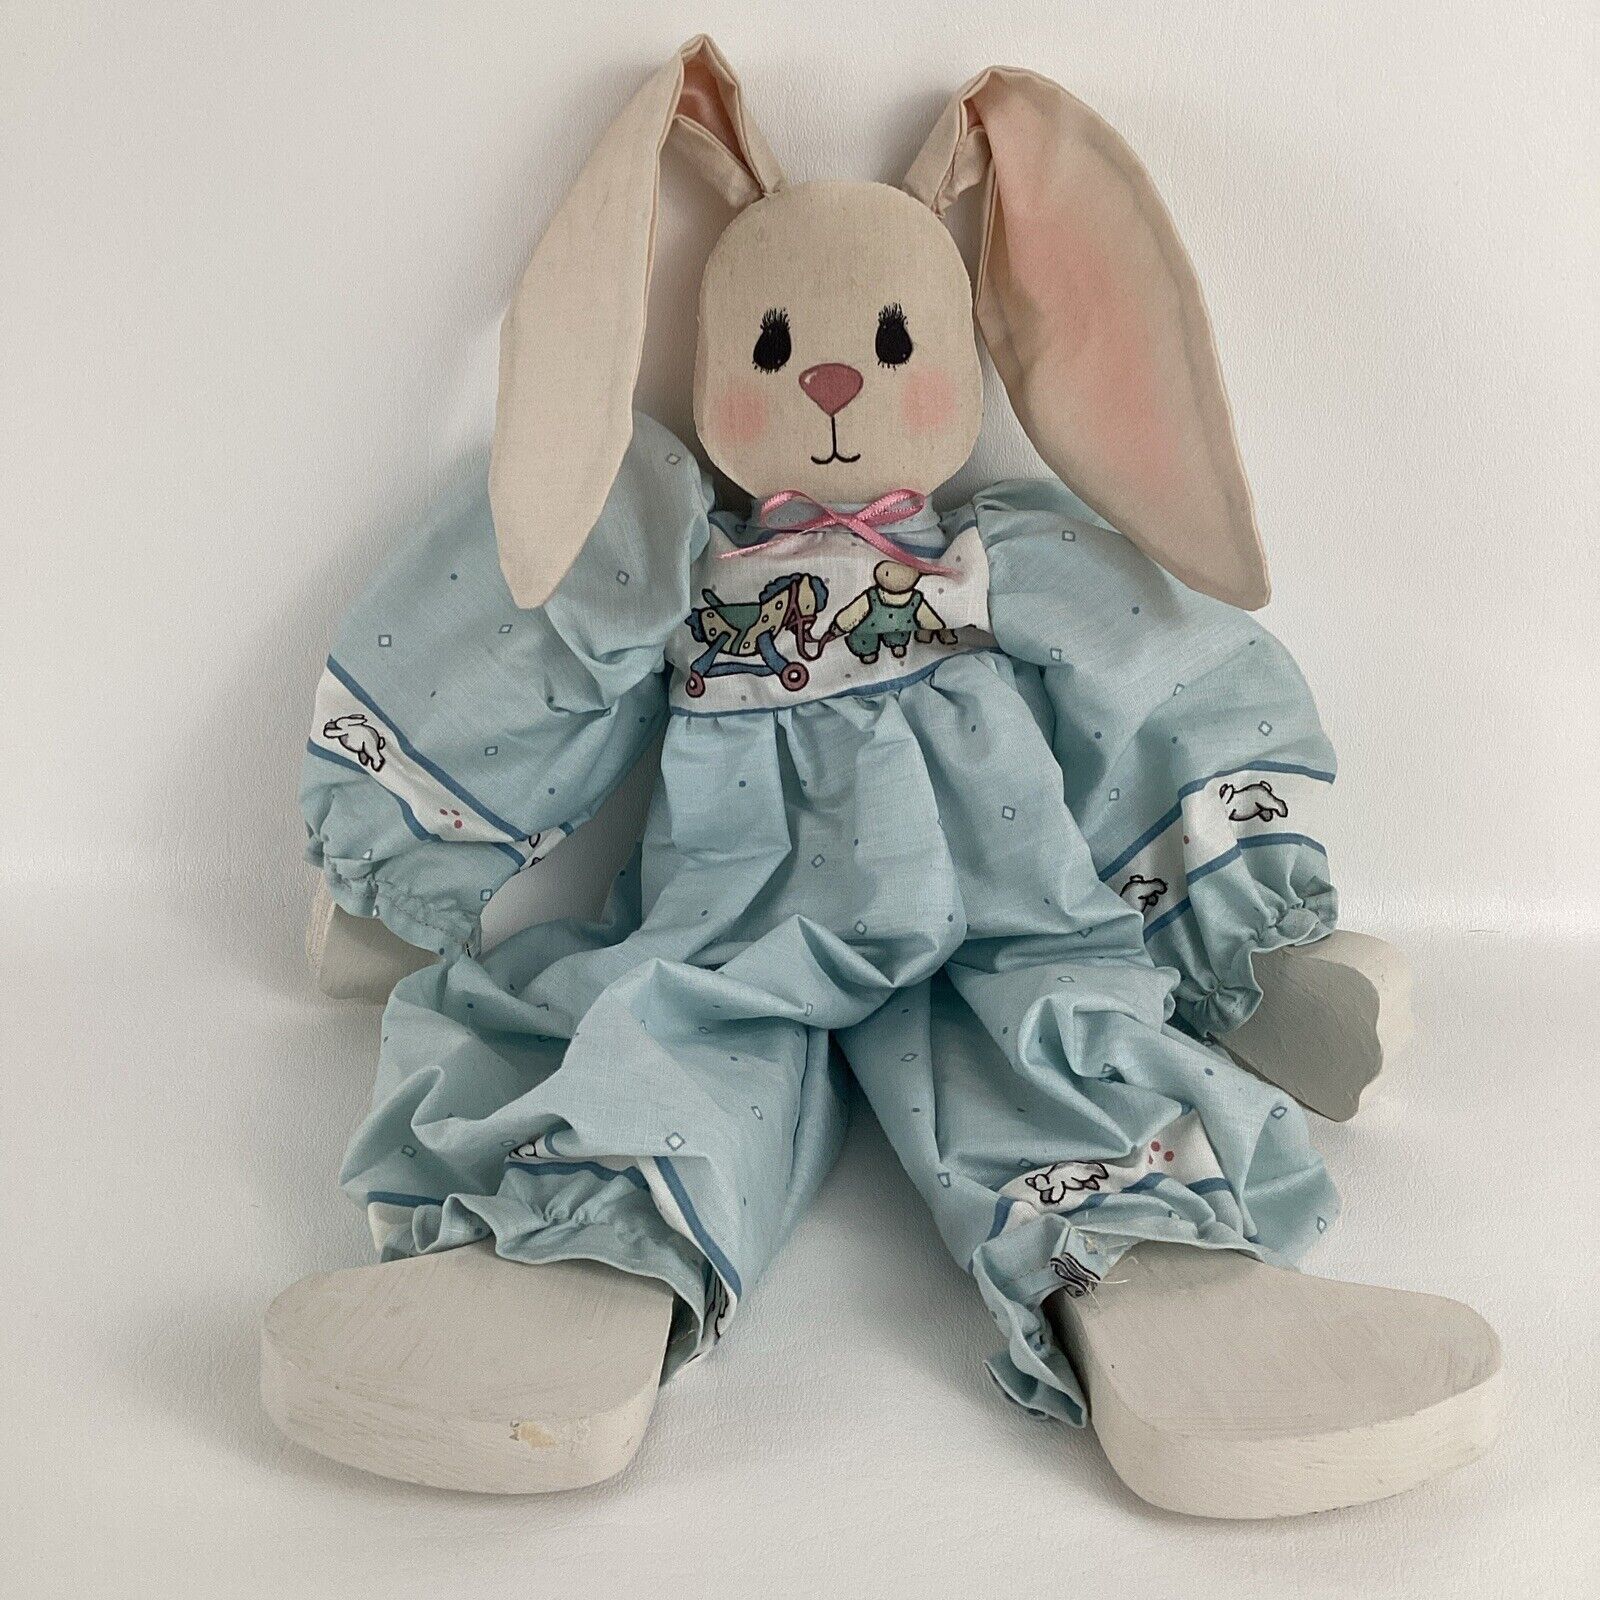 Vintage Daisy Kingdom Bertie Bunny #4251 Completed Handmade 90s Decor Rabbit